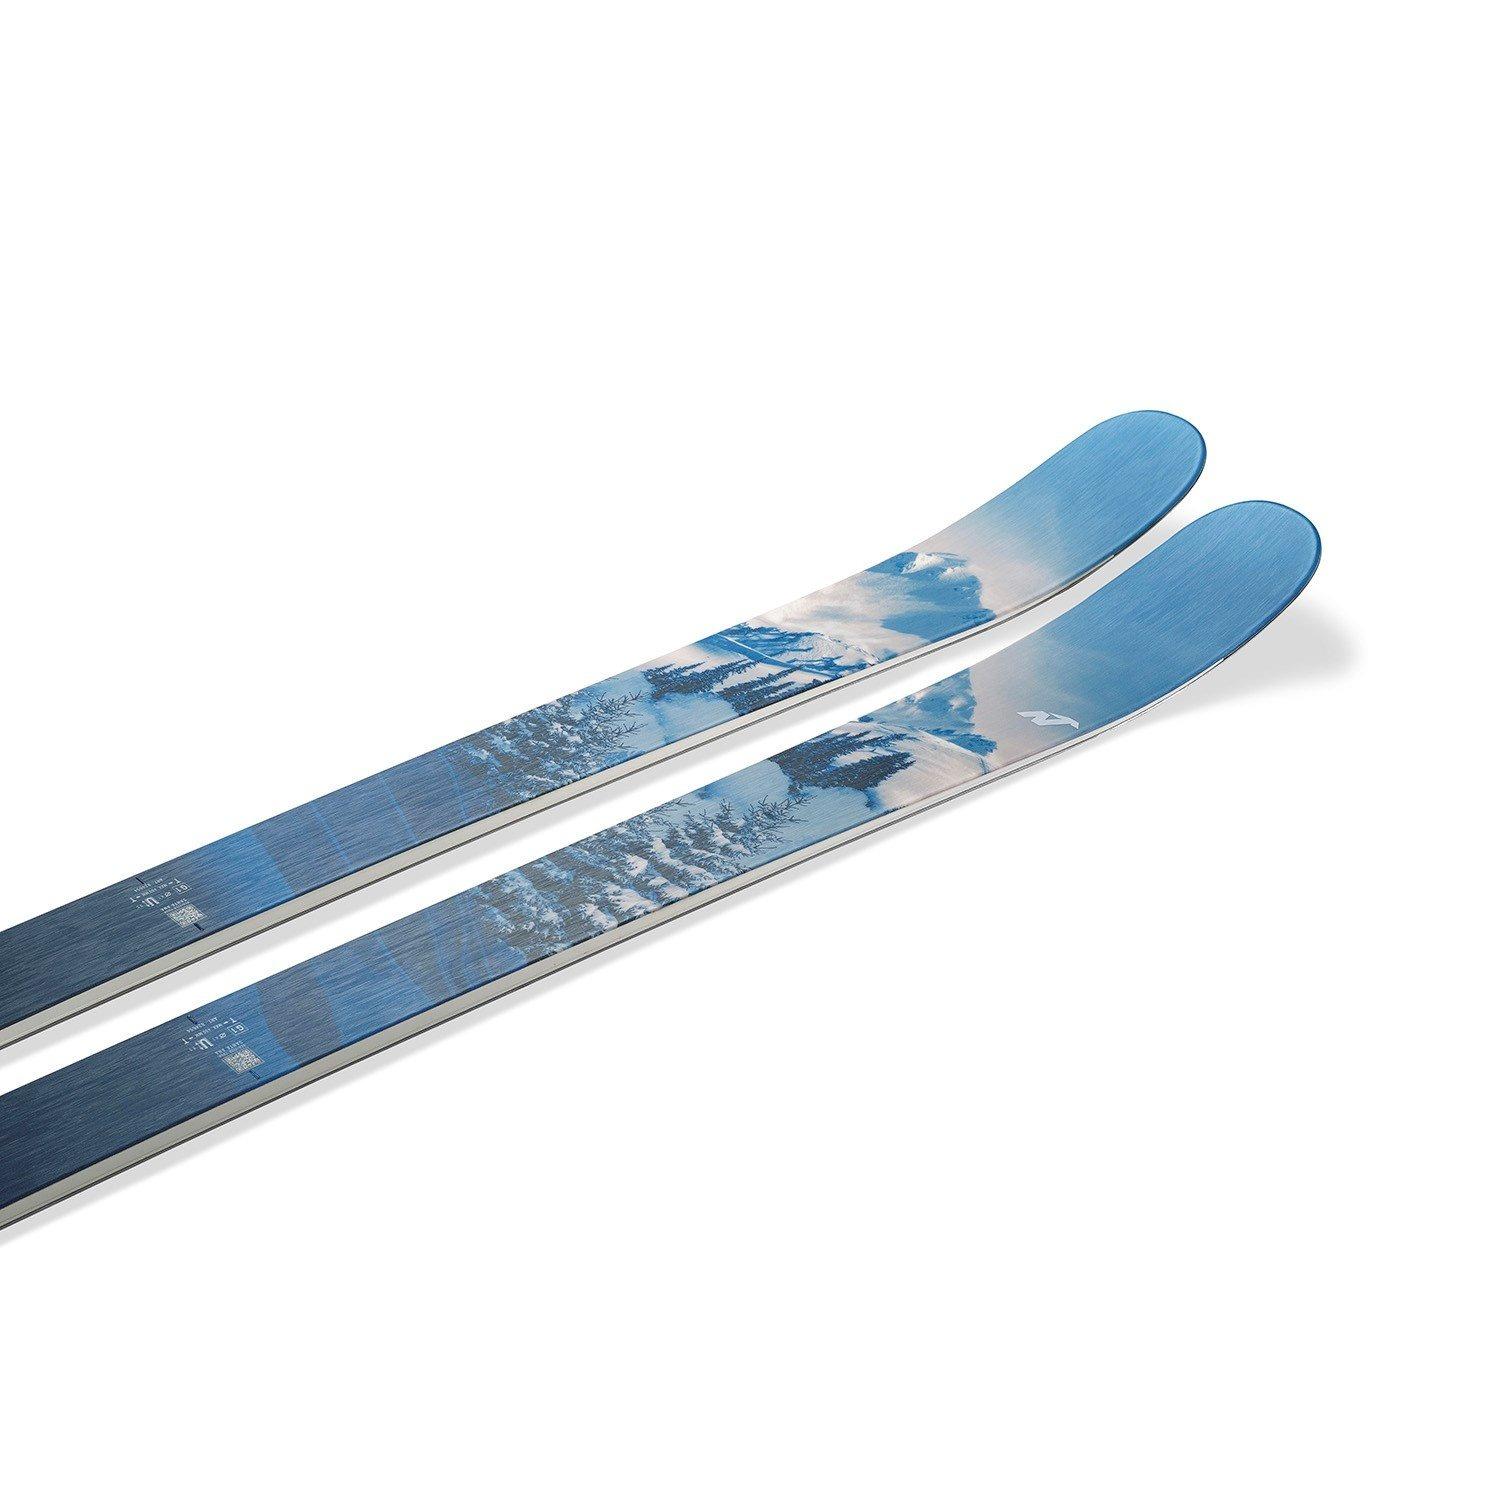 Nordica Santa Ana 93 Skis - Women's